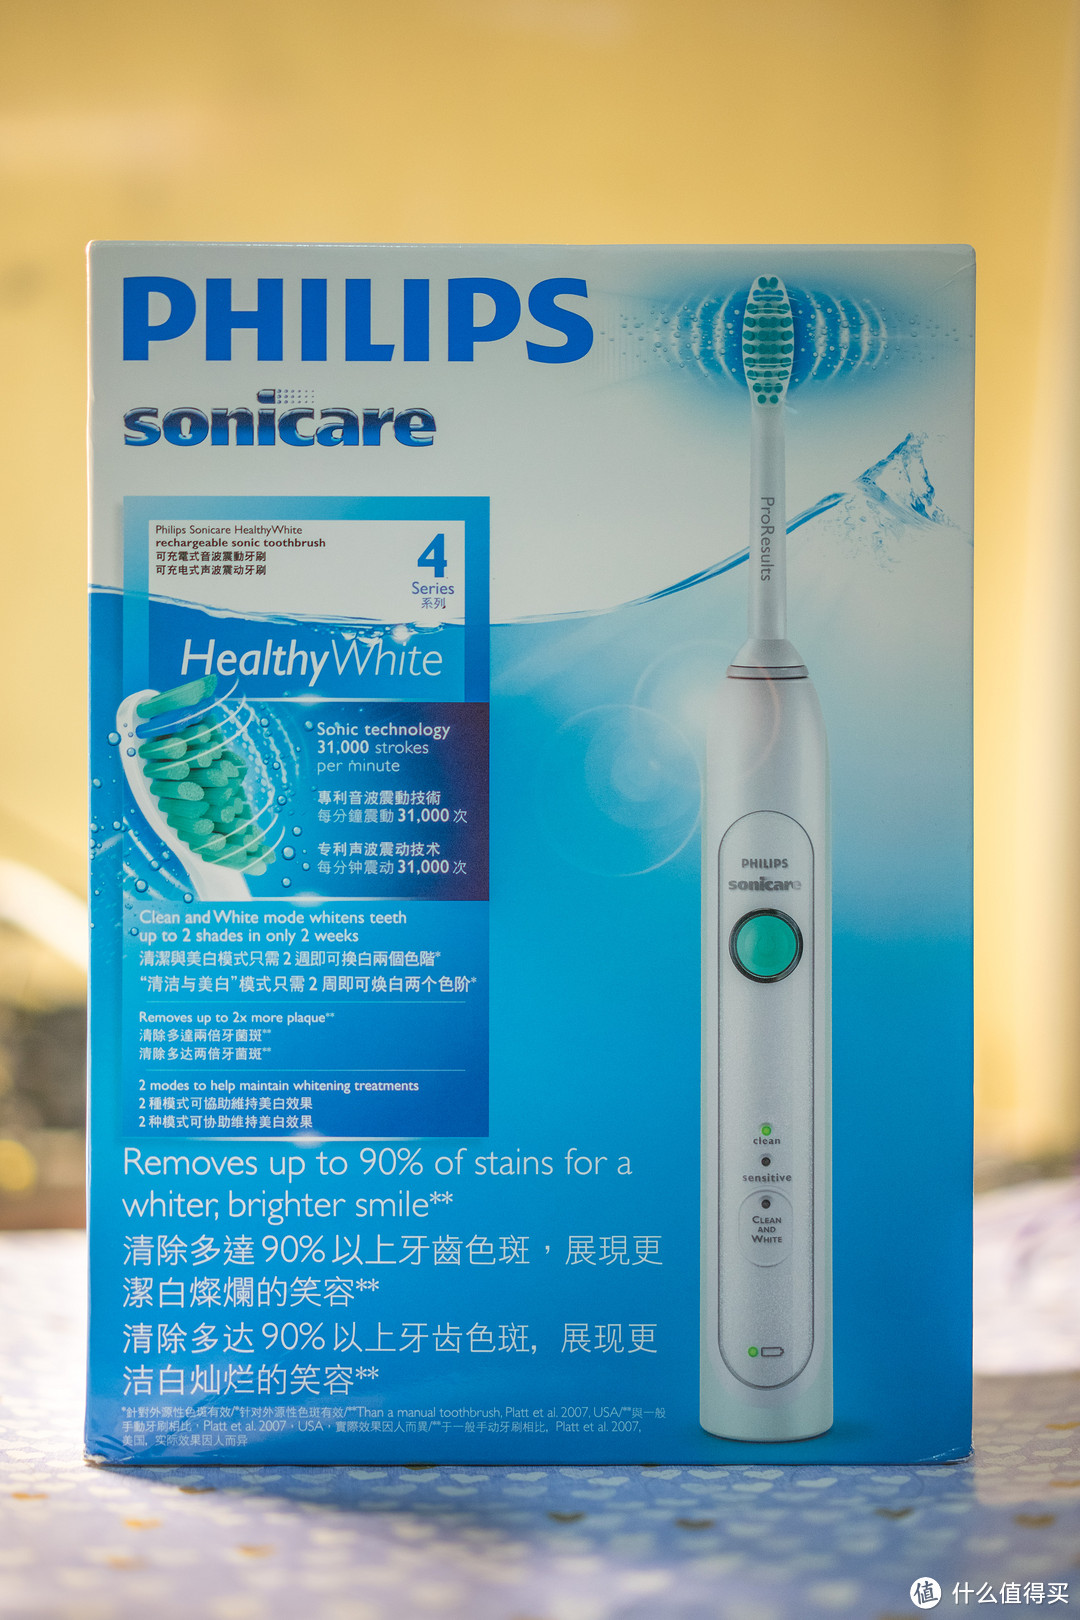 OraCleen S 智能便携牙刷与Philip HX6730超声波、Oral-B PRO3000物理牙刷横向对比测评